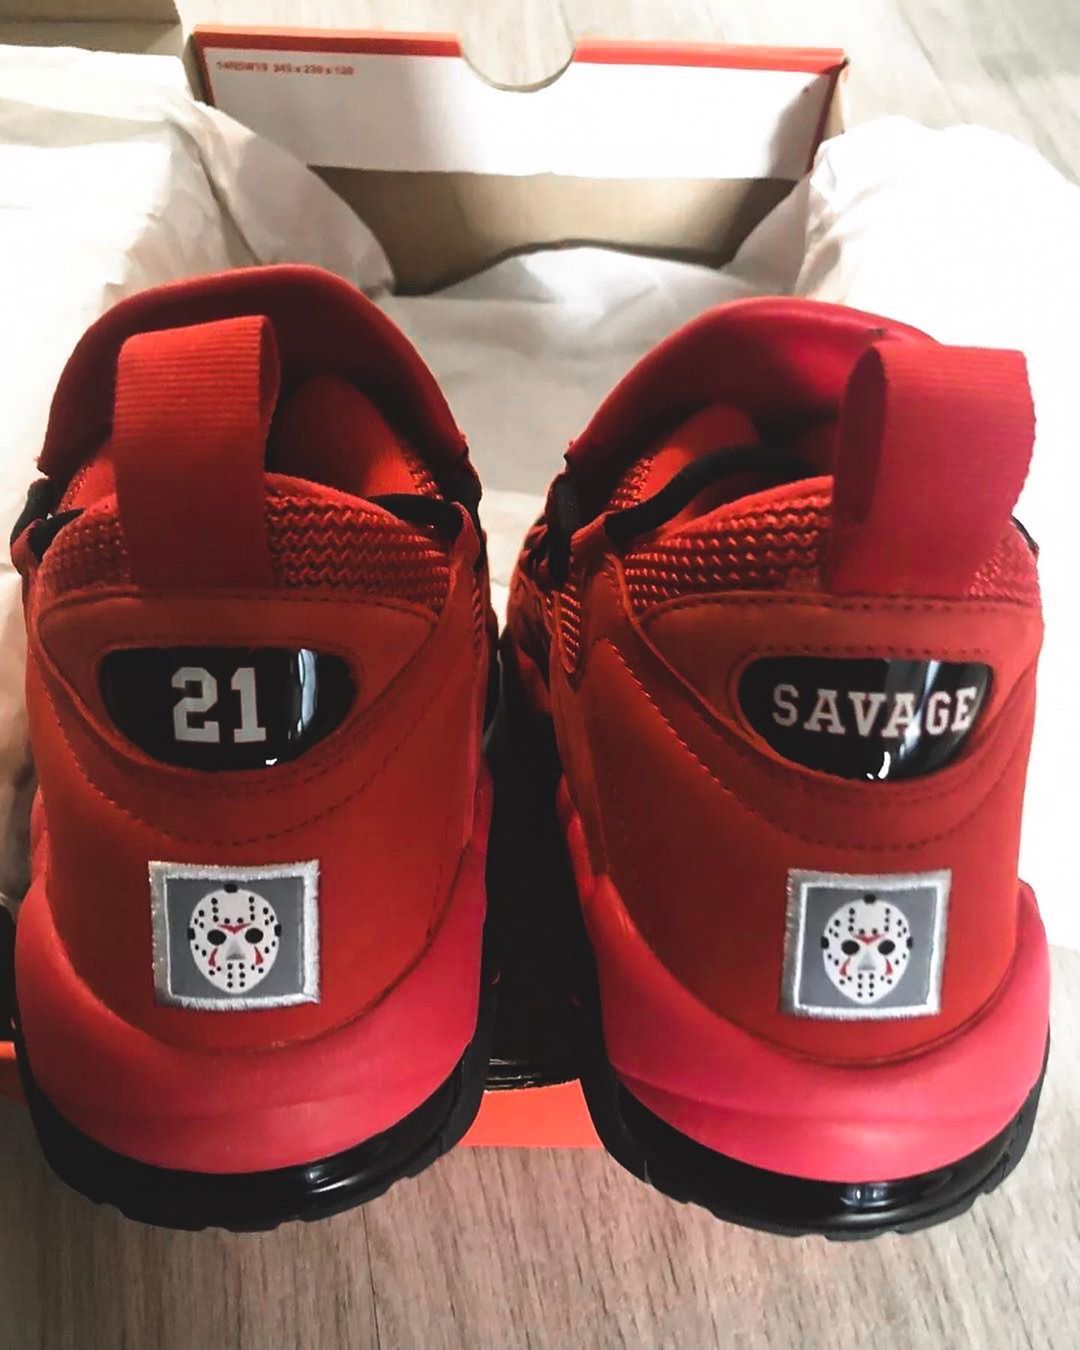 21 savage shoes